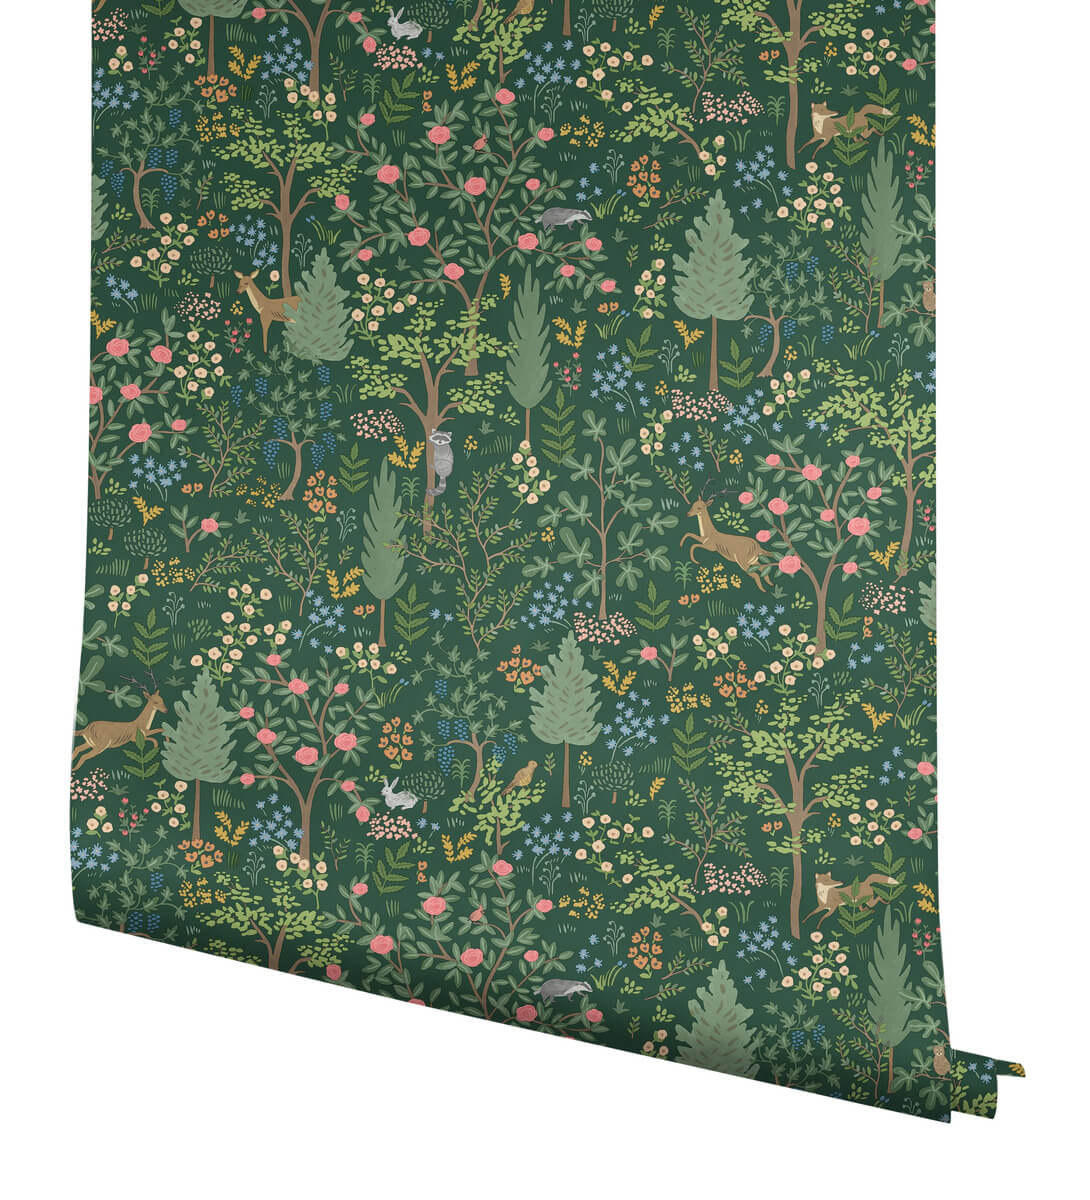 Rifle Paper Co. Third Edition Woodland Peel & Stick Wallpaper - Emerald